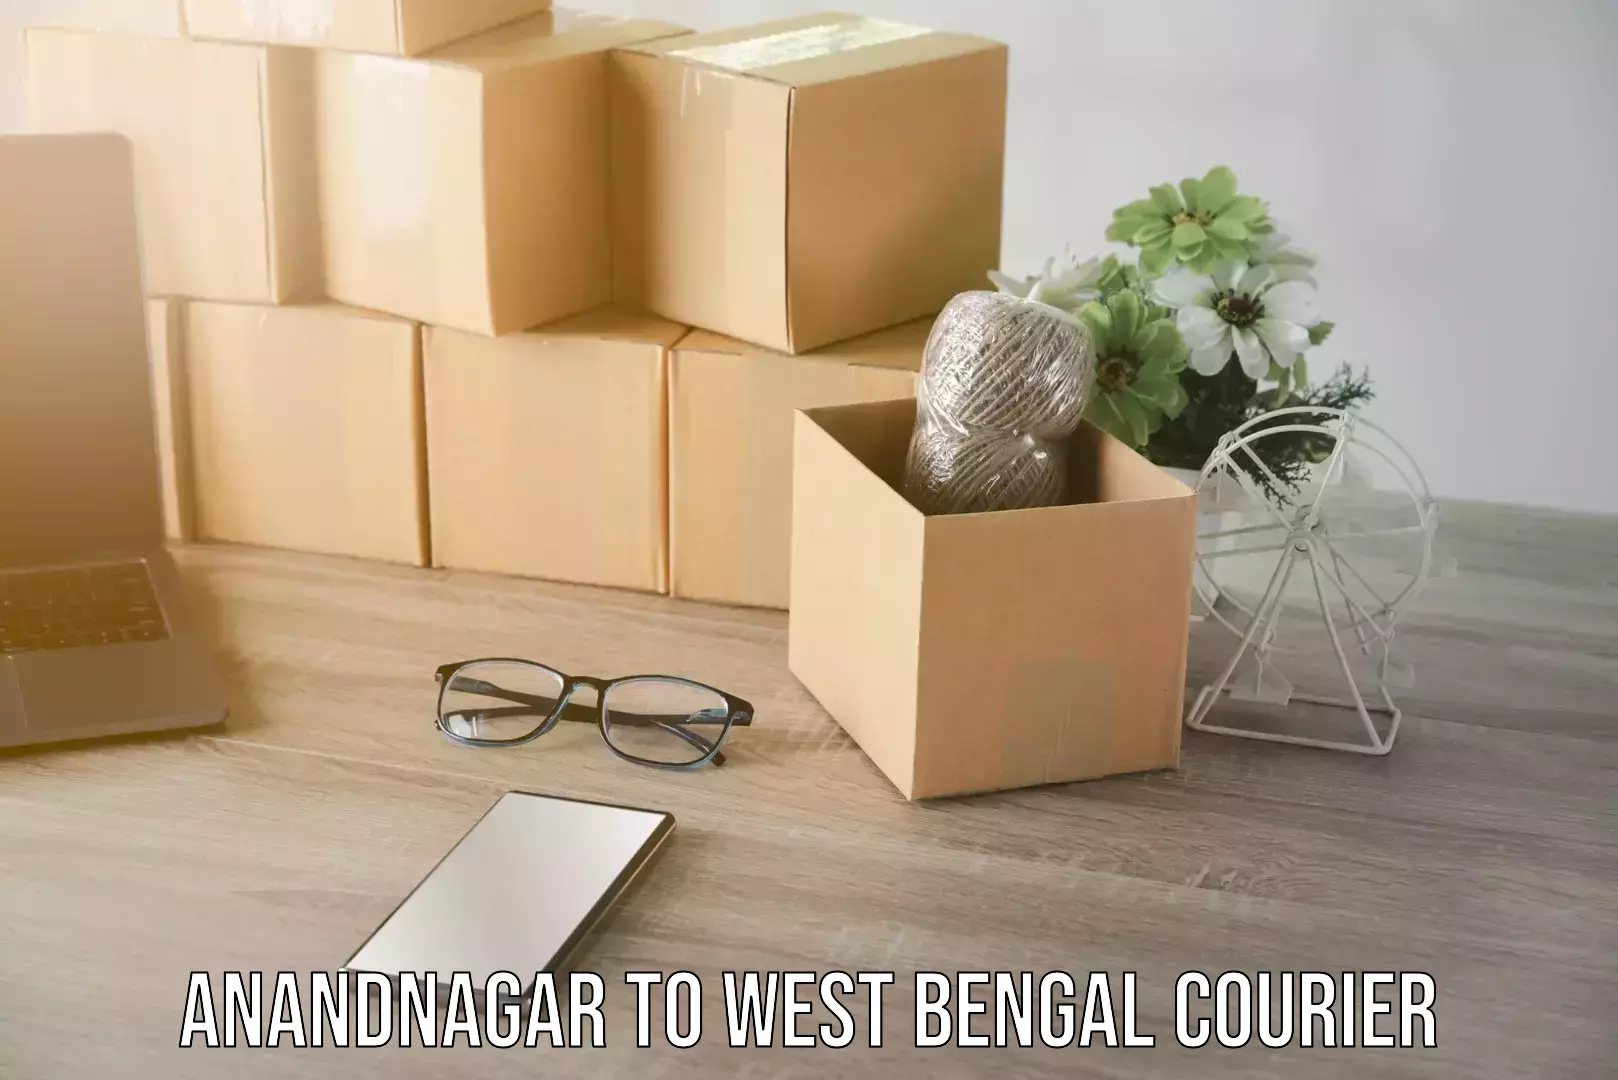 Logistics efficiency Anandnagar to West Bengal